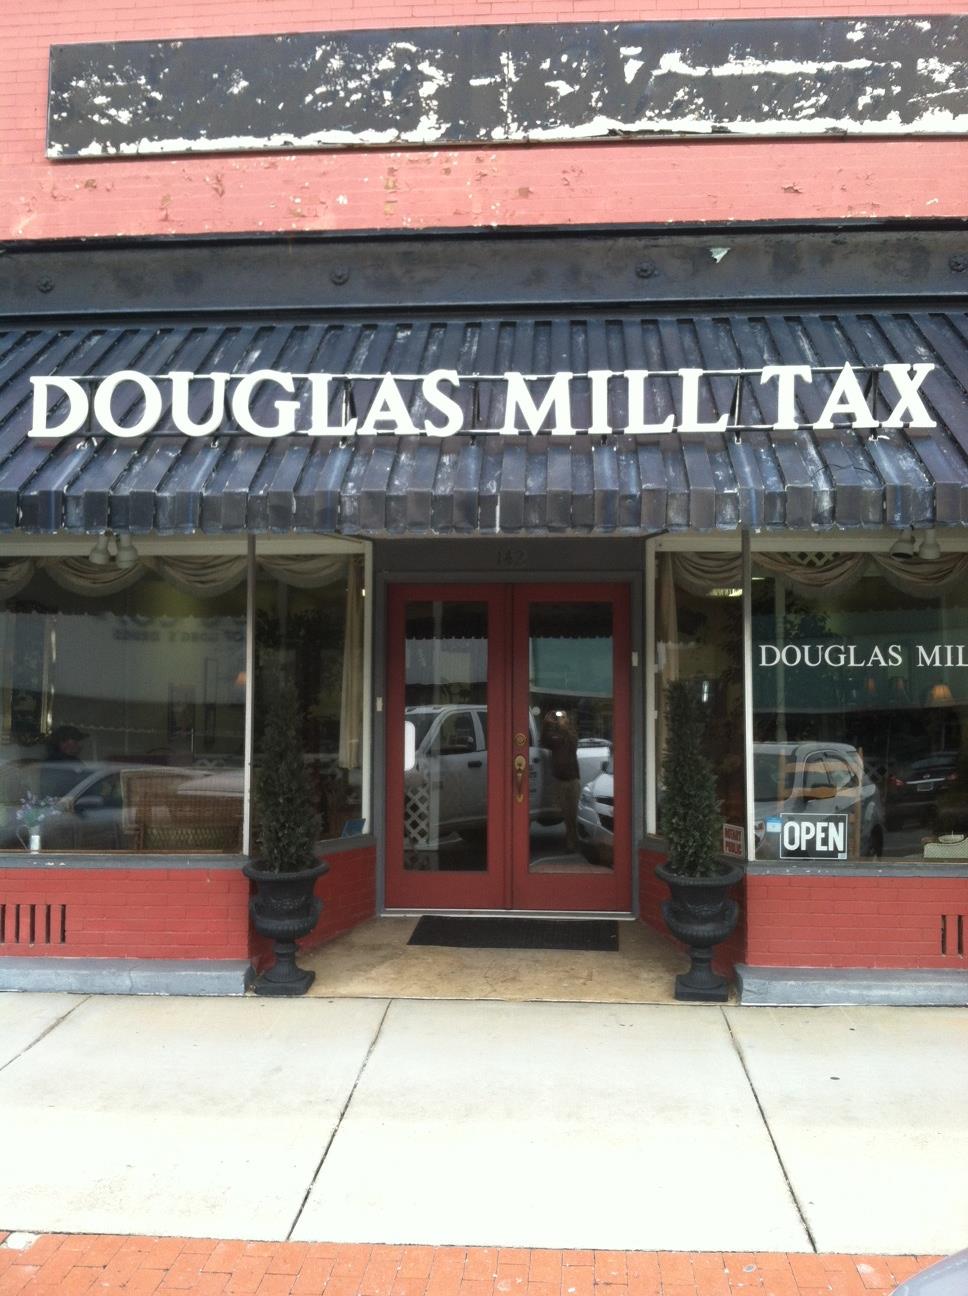 Douglas Mill Tax 142 Main St, Chesterfield South Carolina 29709